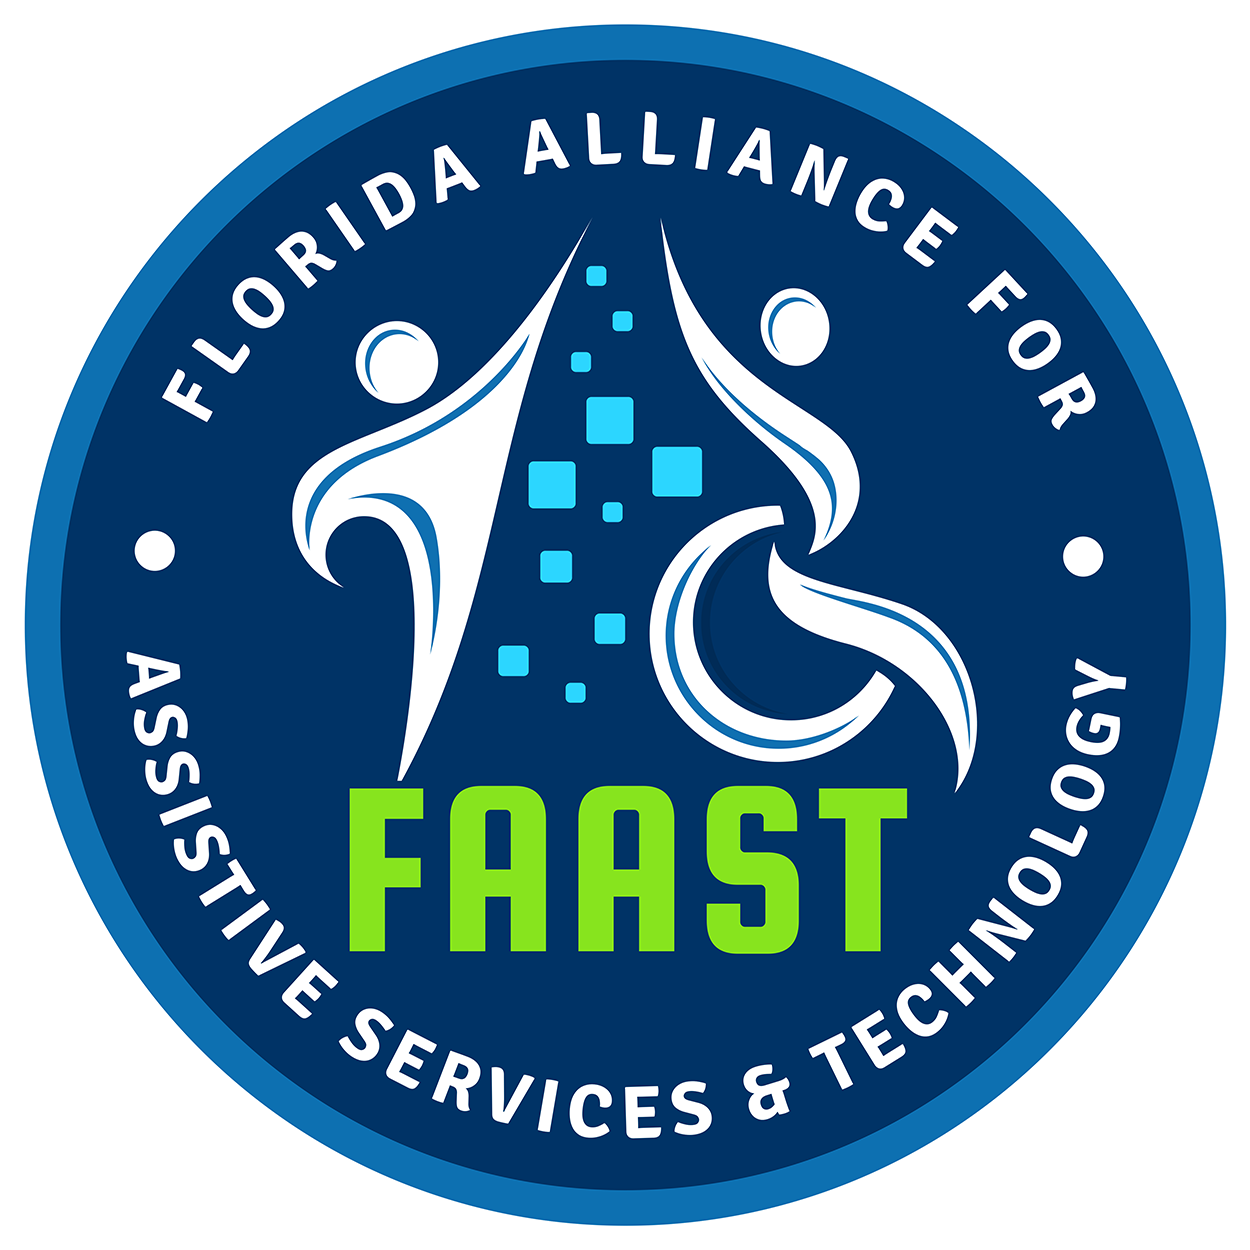 Florida Alliance for Assistive Services & Technology, FAAST, program logo